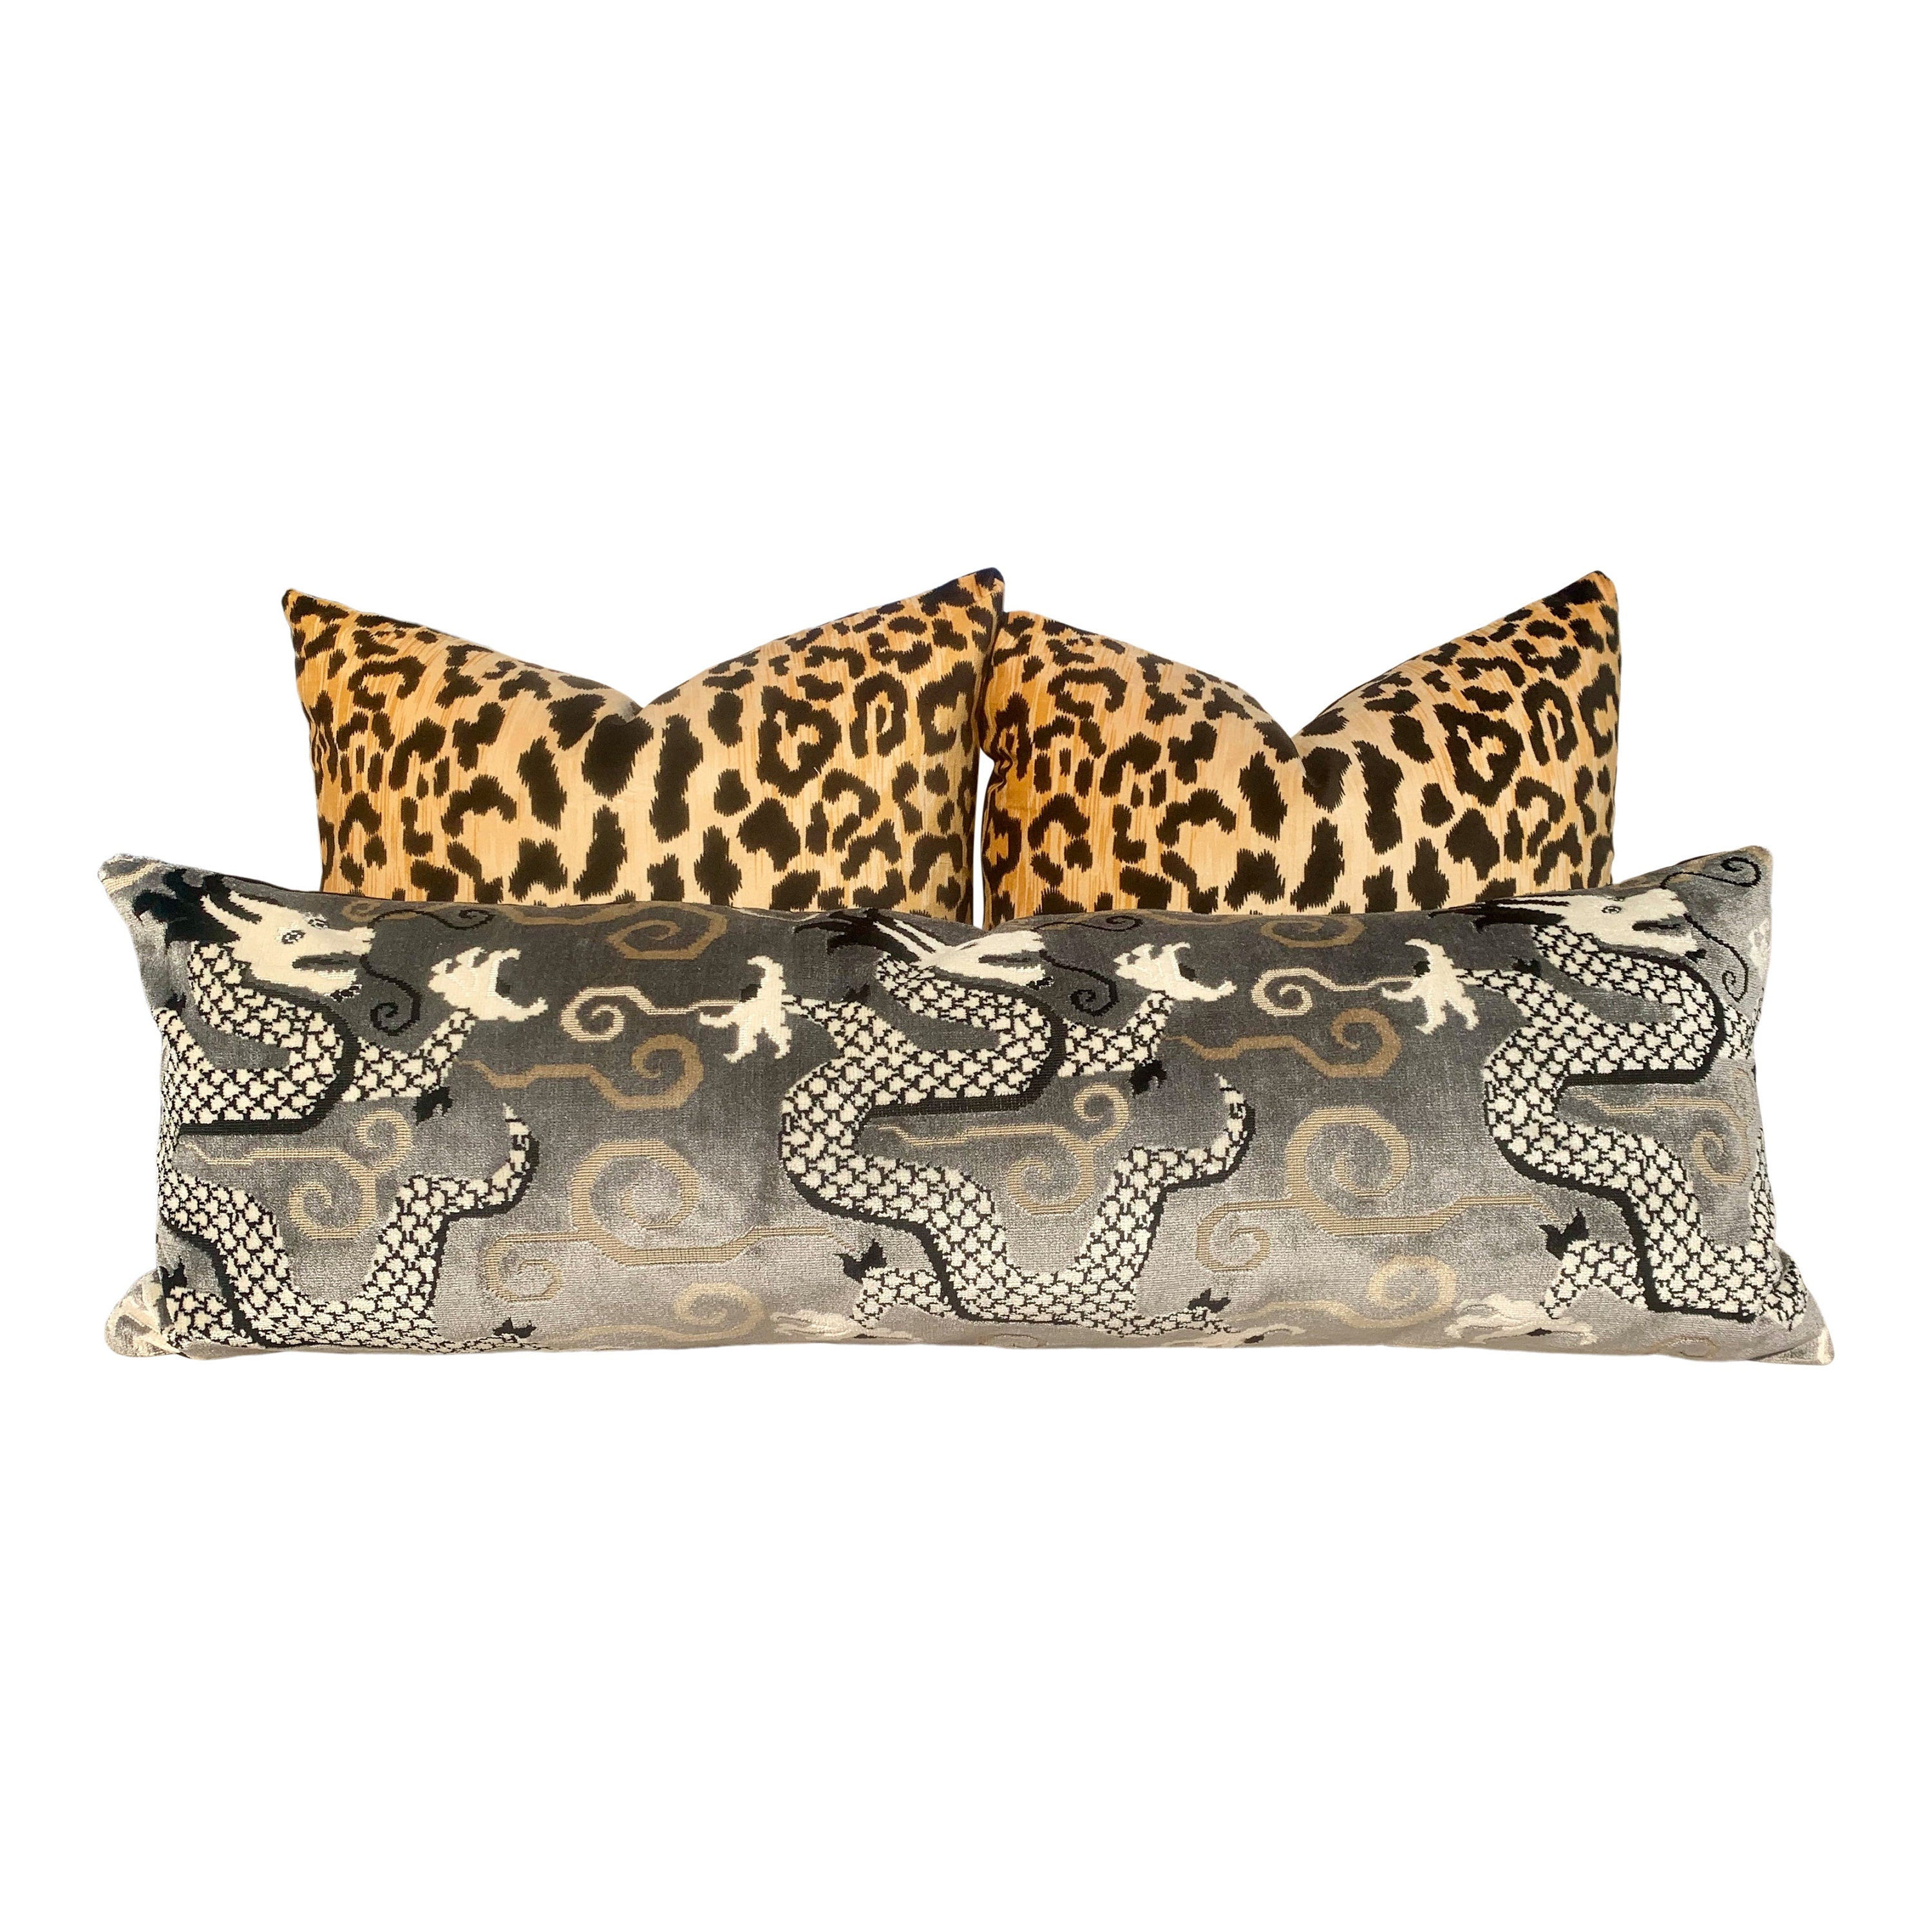 Leopard Velvet Pillow in Gold and Black. Accent Lumbar Animal Skin Pillow Designer Velvet Long Lumbar Pillow Decorative Toss Throw Pillow